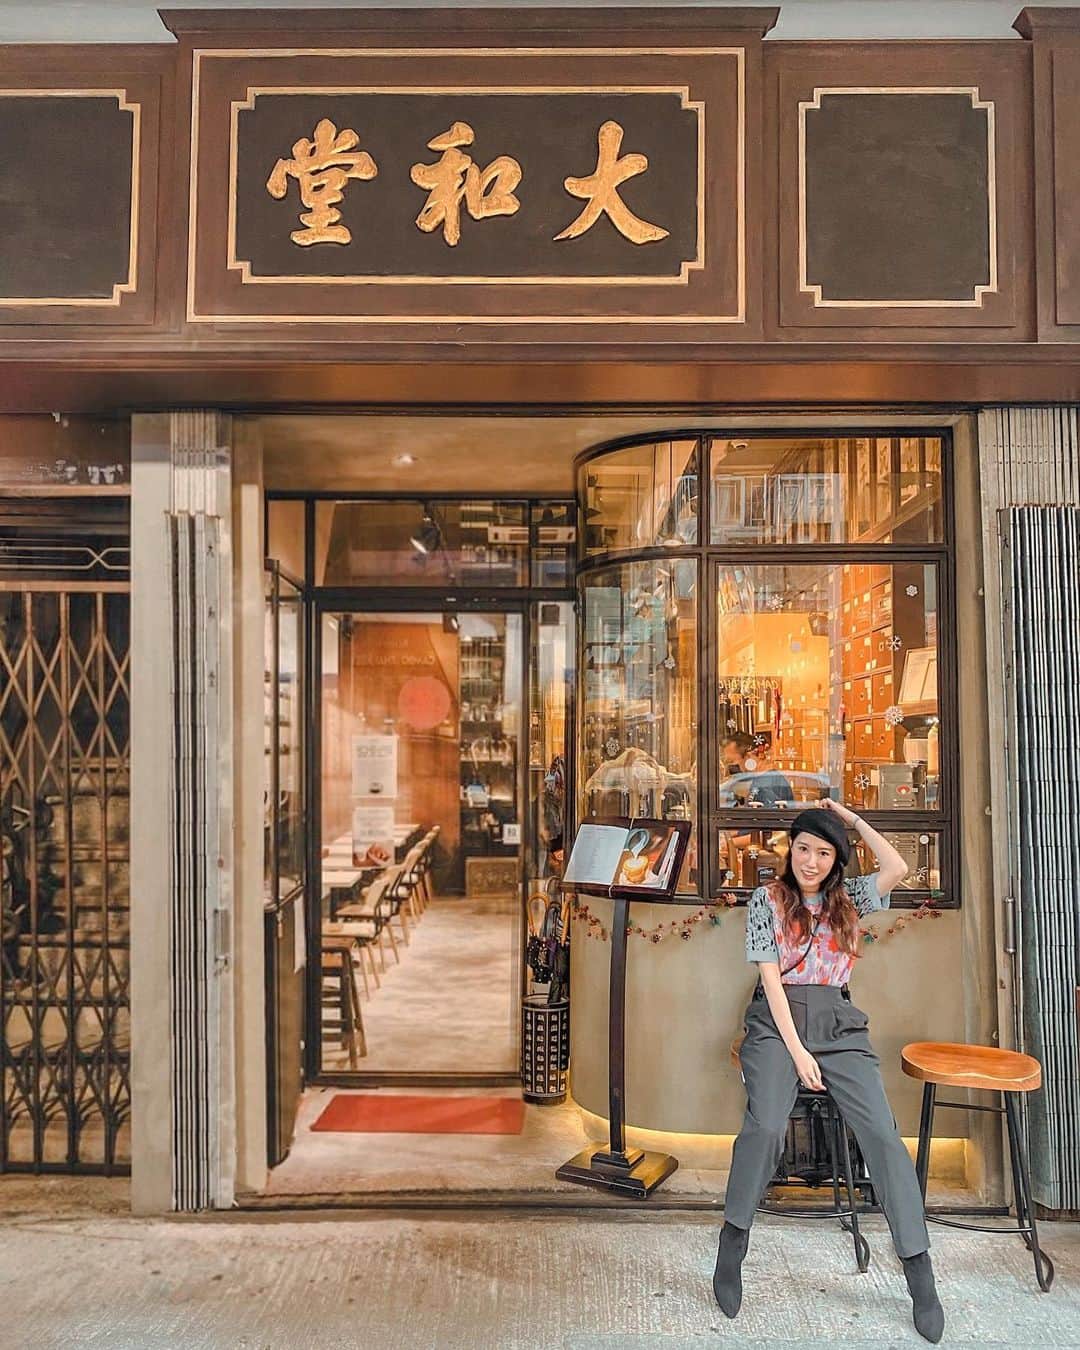 LIKARANAIのインスタグラム：「𝔾𝕠𝕠𝕕 𝕄𝕠𝕣𝕟𝕚𝕟𝕘 𝕄𝕠𝕟𝕕𝕒𝕪☕️ 又是一家存了口袋名單兩年多的咖啡廳 從差不多百年的醫館活化成文青cafe 但仍保留著滿滿懷舊風 牆身的百子櫃真的一絶 整個設計依舊充滿著老香港情懷  喜歡懷舊風的可以點餐單𥚃的雞蛋仔或菠蘿油 Gimmicky十足 但身為 churro控真的不得不能點上這款西班牙油條 配上雪糕或是沾上朱古力醬來吃都是人間美食 可惜那天還未到晚餐時間 我們也沒點太多 留待下次再試🧇➕🍗 。 。 。 。 。 。 #hongkong #香港 #香港旅行 #香港旅 #hongkonginsta #discoverhongkong #hongkongart #instahk #instafood #foodie #foodporn #foodstagram #hkcafe #coffeeshopdesign #cafehopping #hongkongphoto #timeouthongkong #hkig #likeforlikes #shoutout #コメント返し #lightroom #lightroompresets #lightroom調色 #hkblogger #写真好きな人と繋がりたい #カメラ女子 #カメラ好きな人と繋がりたい」